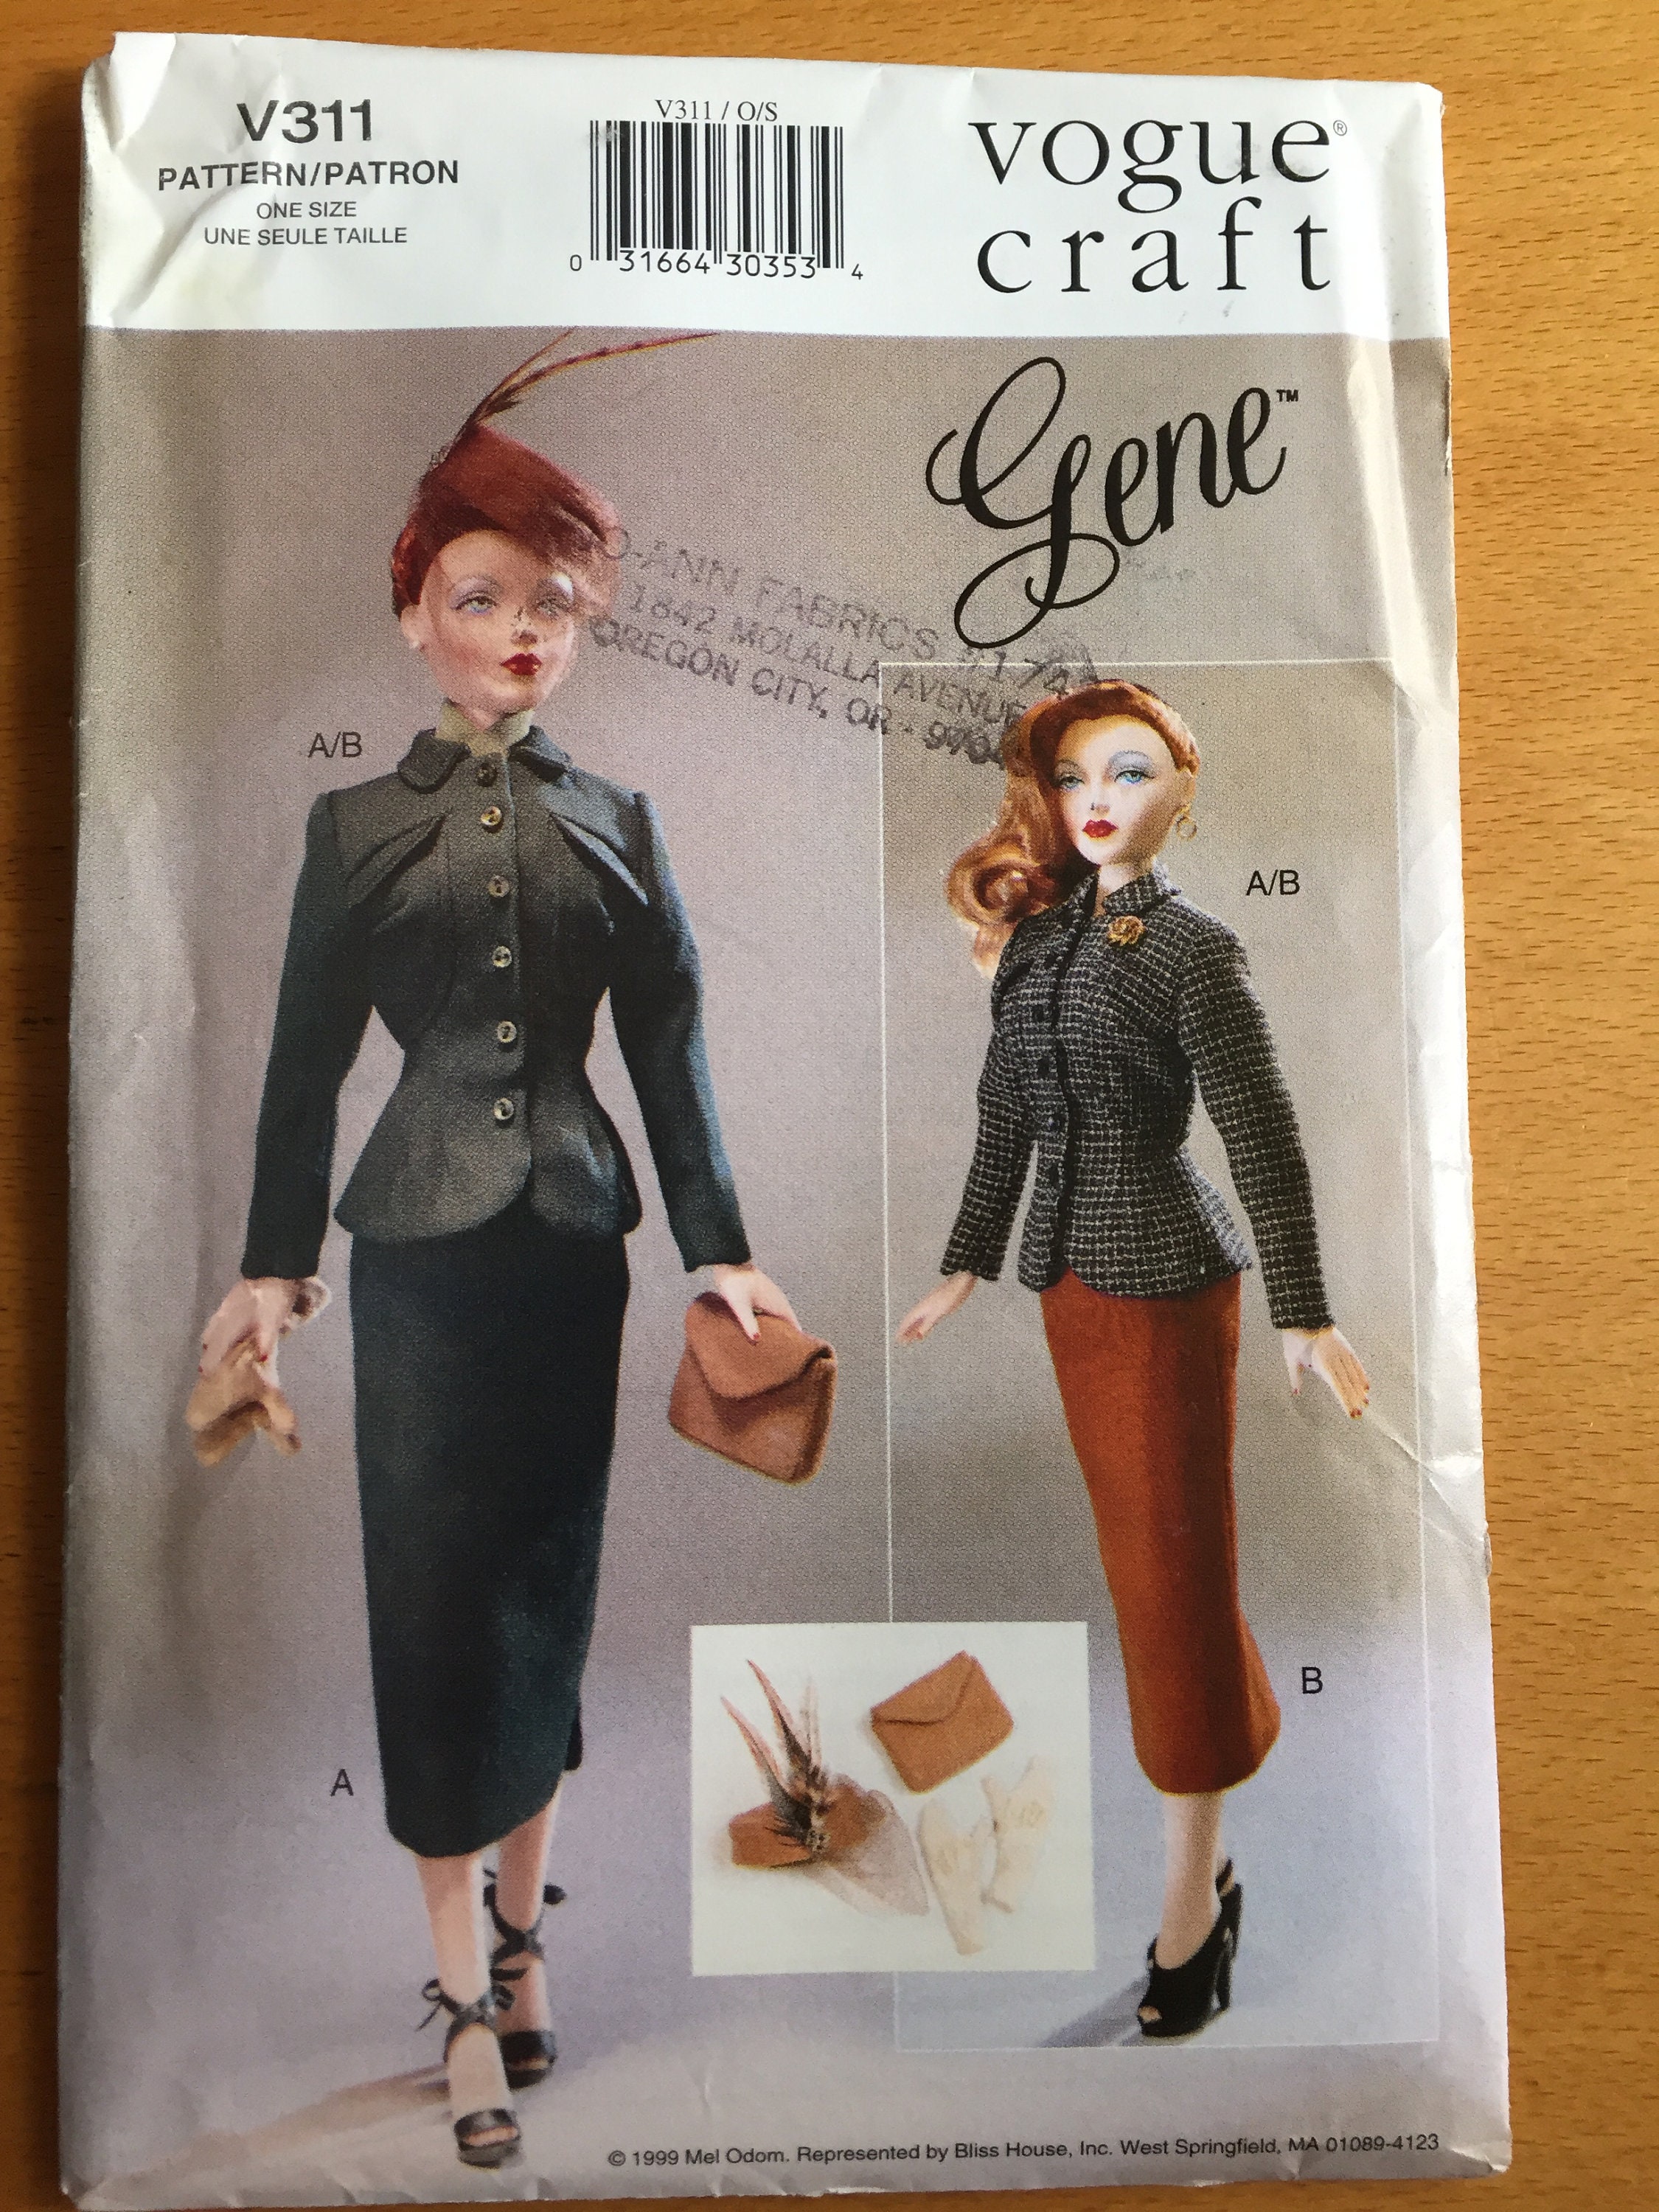 Vogue Craft 311/7105 GENE sewing pattern 15 1/2 inch doll | Etsy